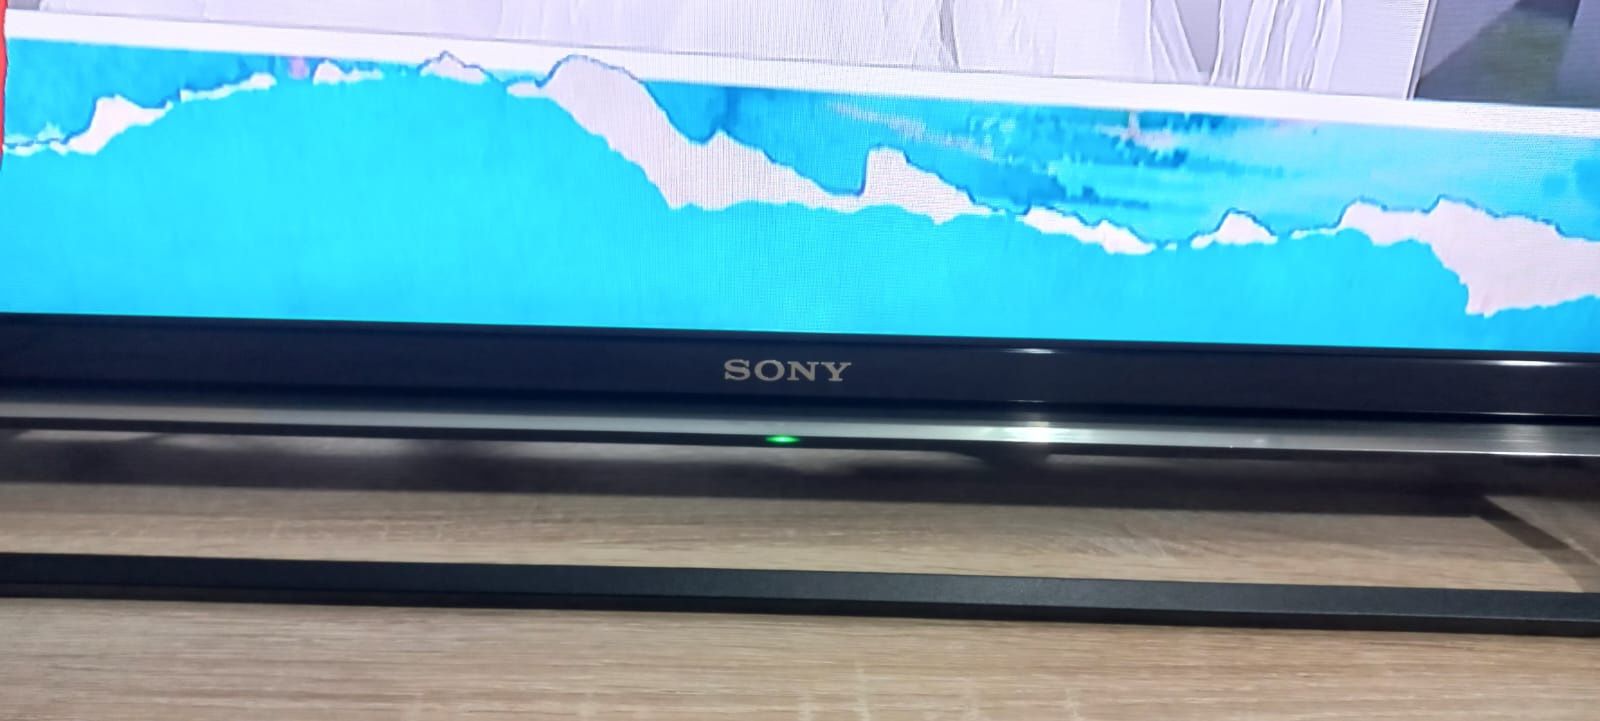 Tv Sony full hd model KDL 40R 480 B